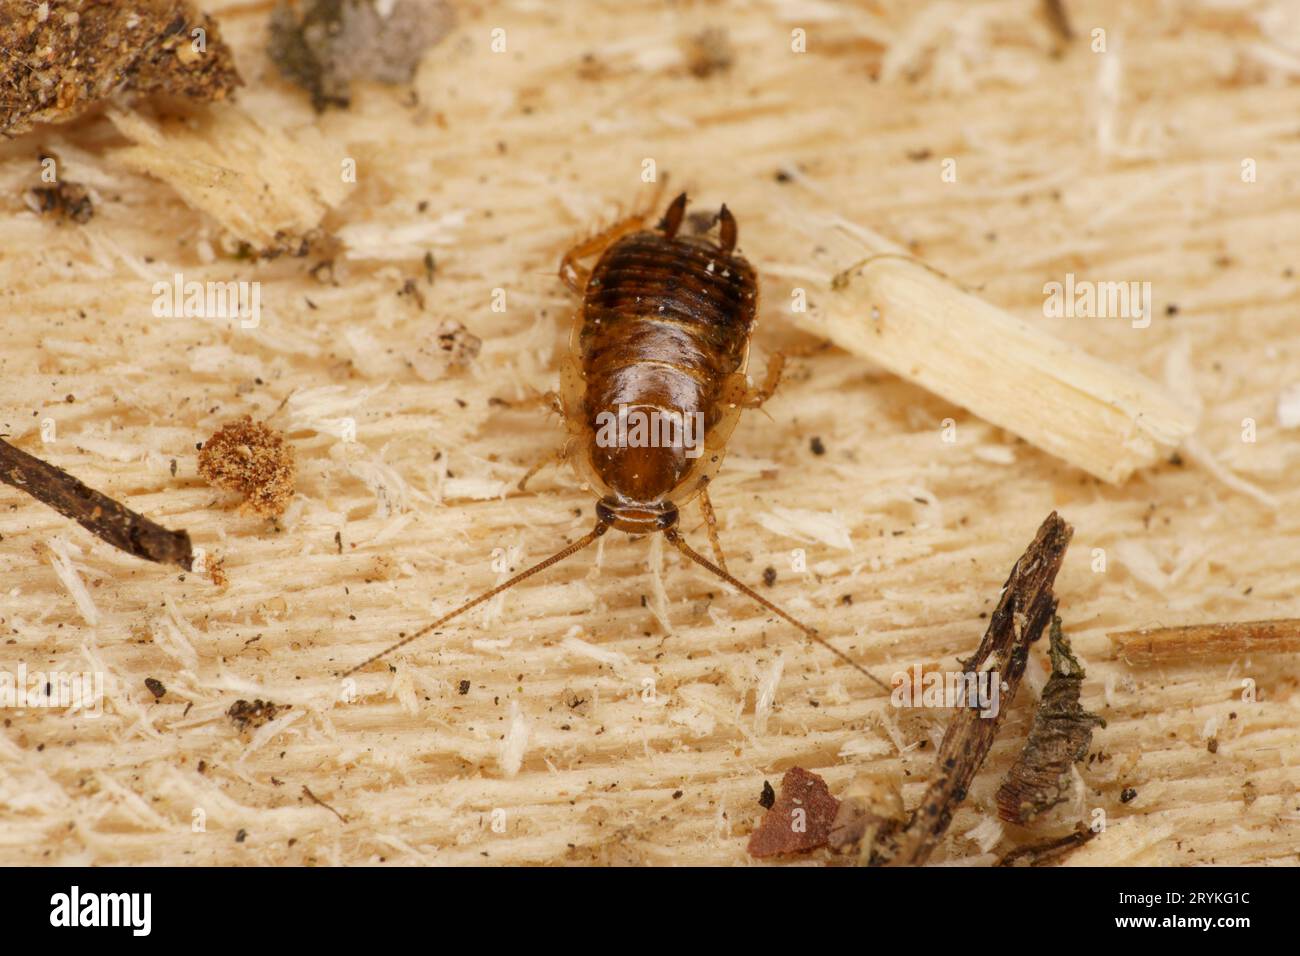 Ectobius lapponicus Family Ectobiidae genus Ectobius Dusky scarafaggio natura selvaggia fotografia di insetti, foto, carta da parati Foto Stock